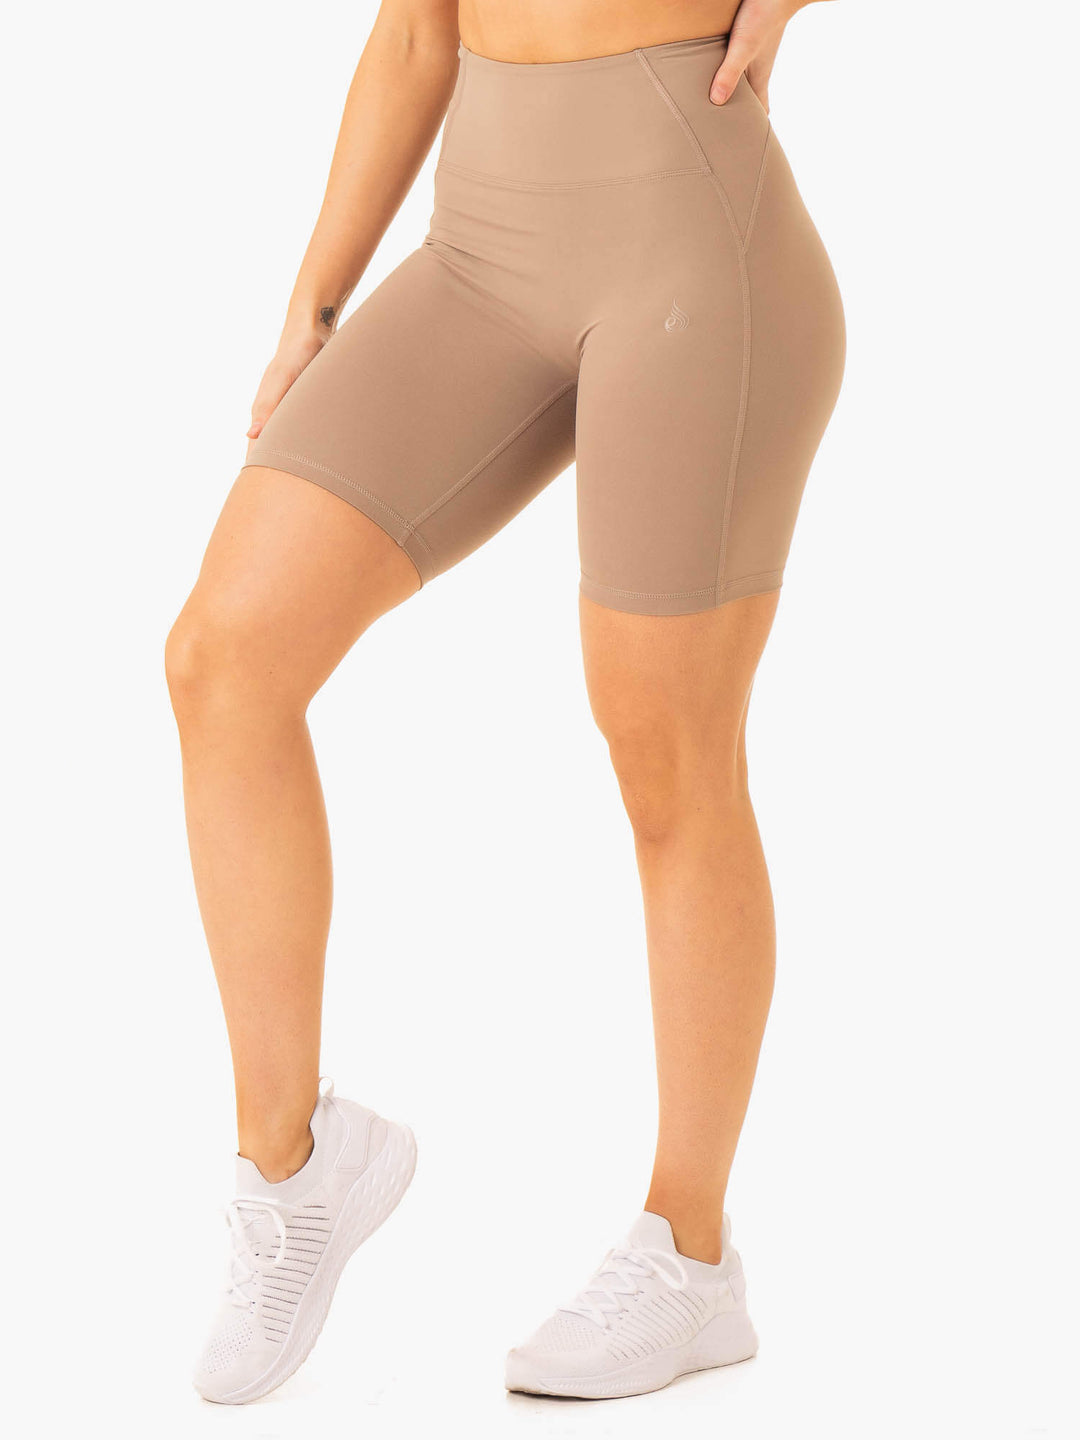 NKD Frame High Waisted Bike Shorts - Latte Clothing Ryderwear 